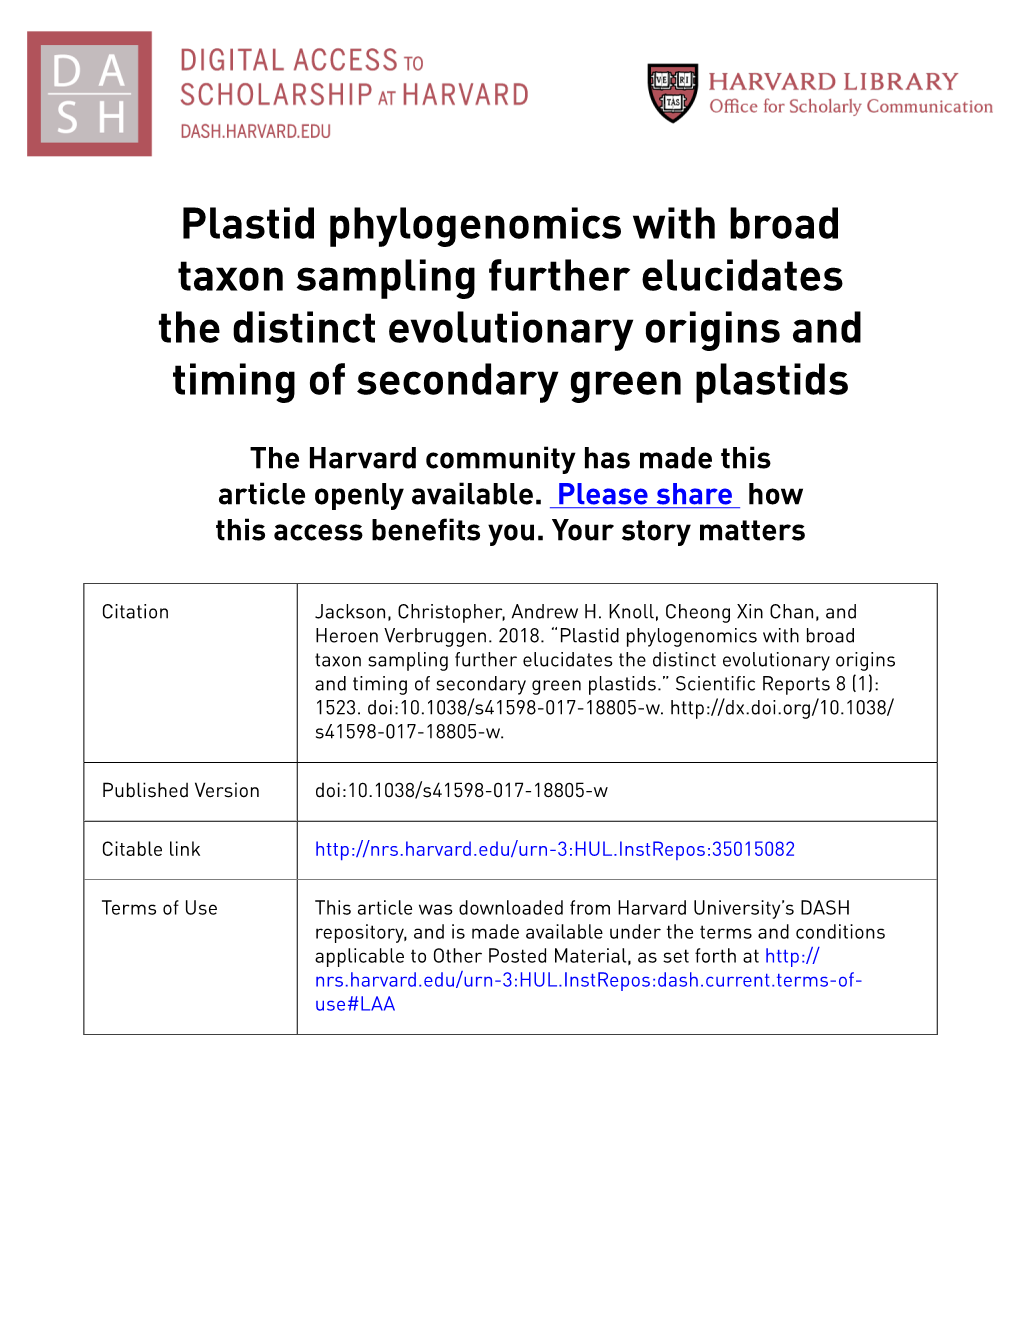 Plastid Phylogenomics with Broad Taxon Sampling Further Elucidates the Distinct Evolutionary Origins and Timing of Secondary Green Plastids